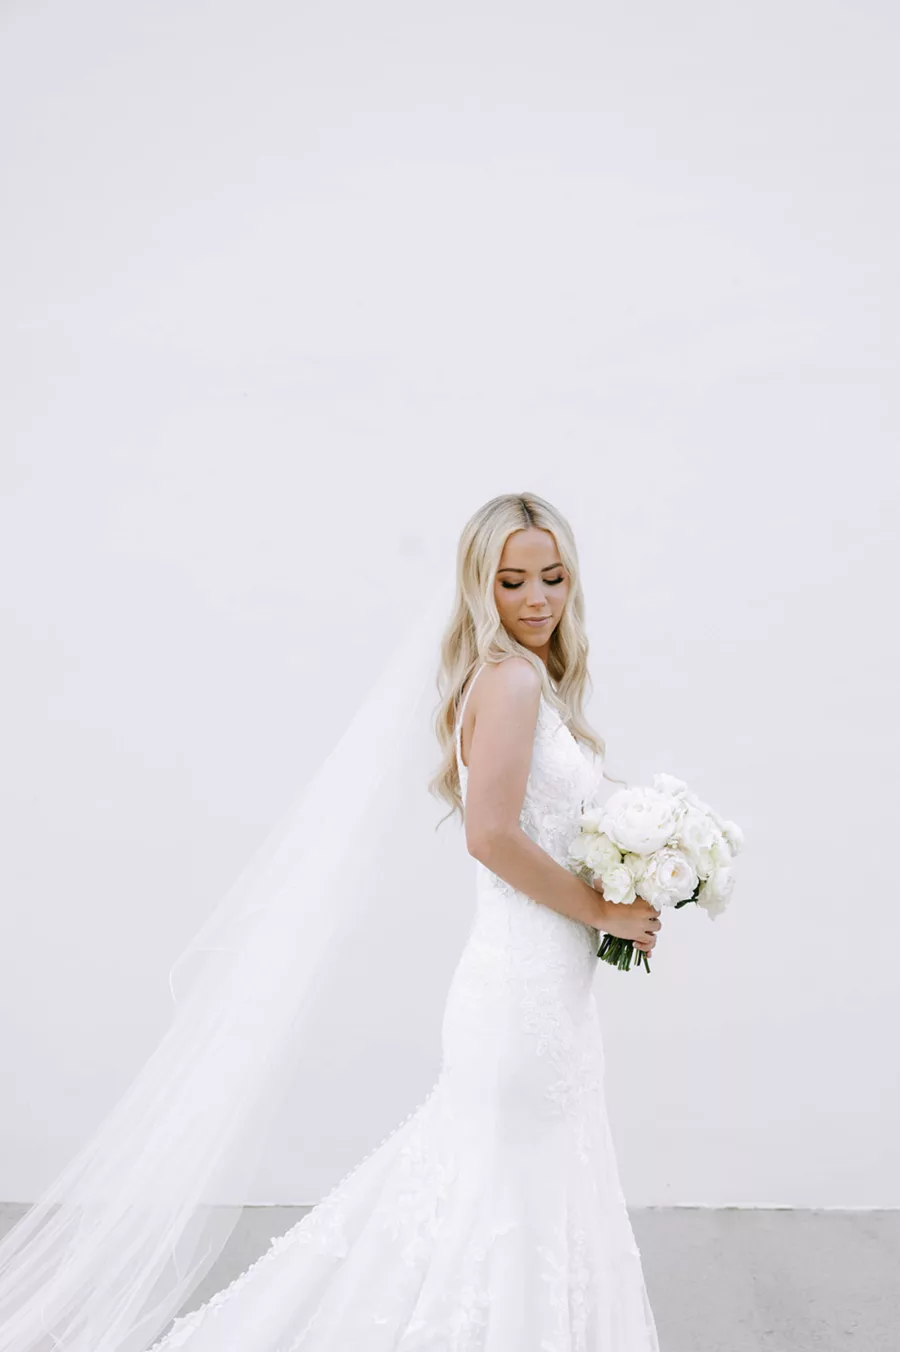 Bridal Glamour Portrait | White Rose and Peony Wedding Bouquet Inspiration | Tampa Bay Florist Bloom Shakalaka